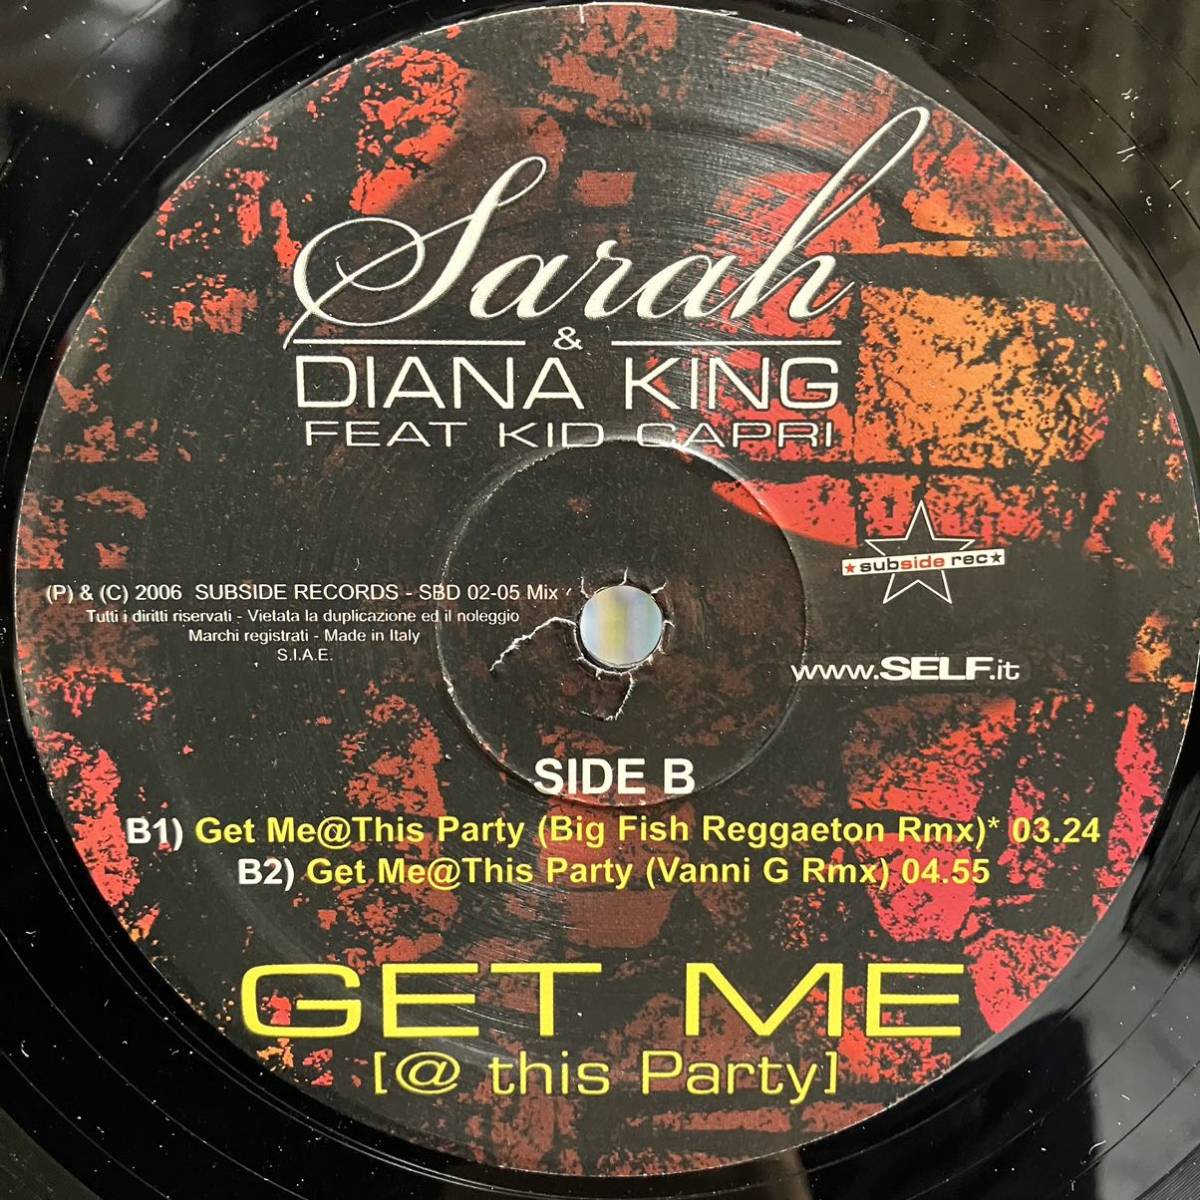 Sarah & Diana King ft. Kid Capri / Get Me@This Party Alex Grani Rmx Big Fish Reggaeton Vanni G Rihanna Pon De Replay 激似トラック_画像4